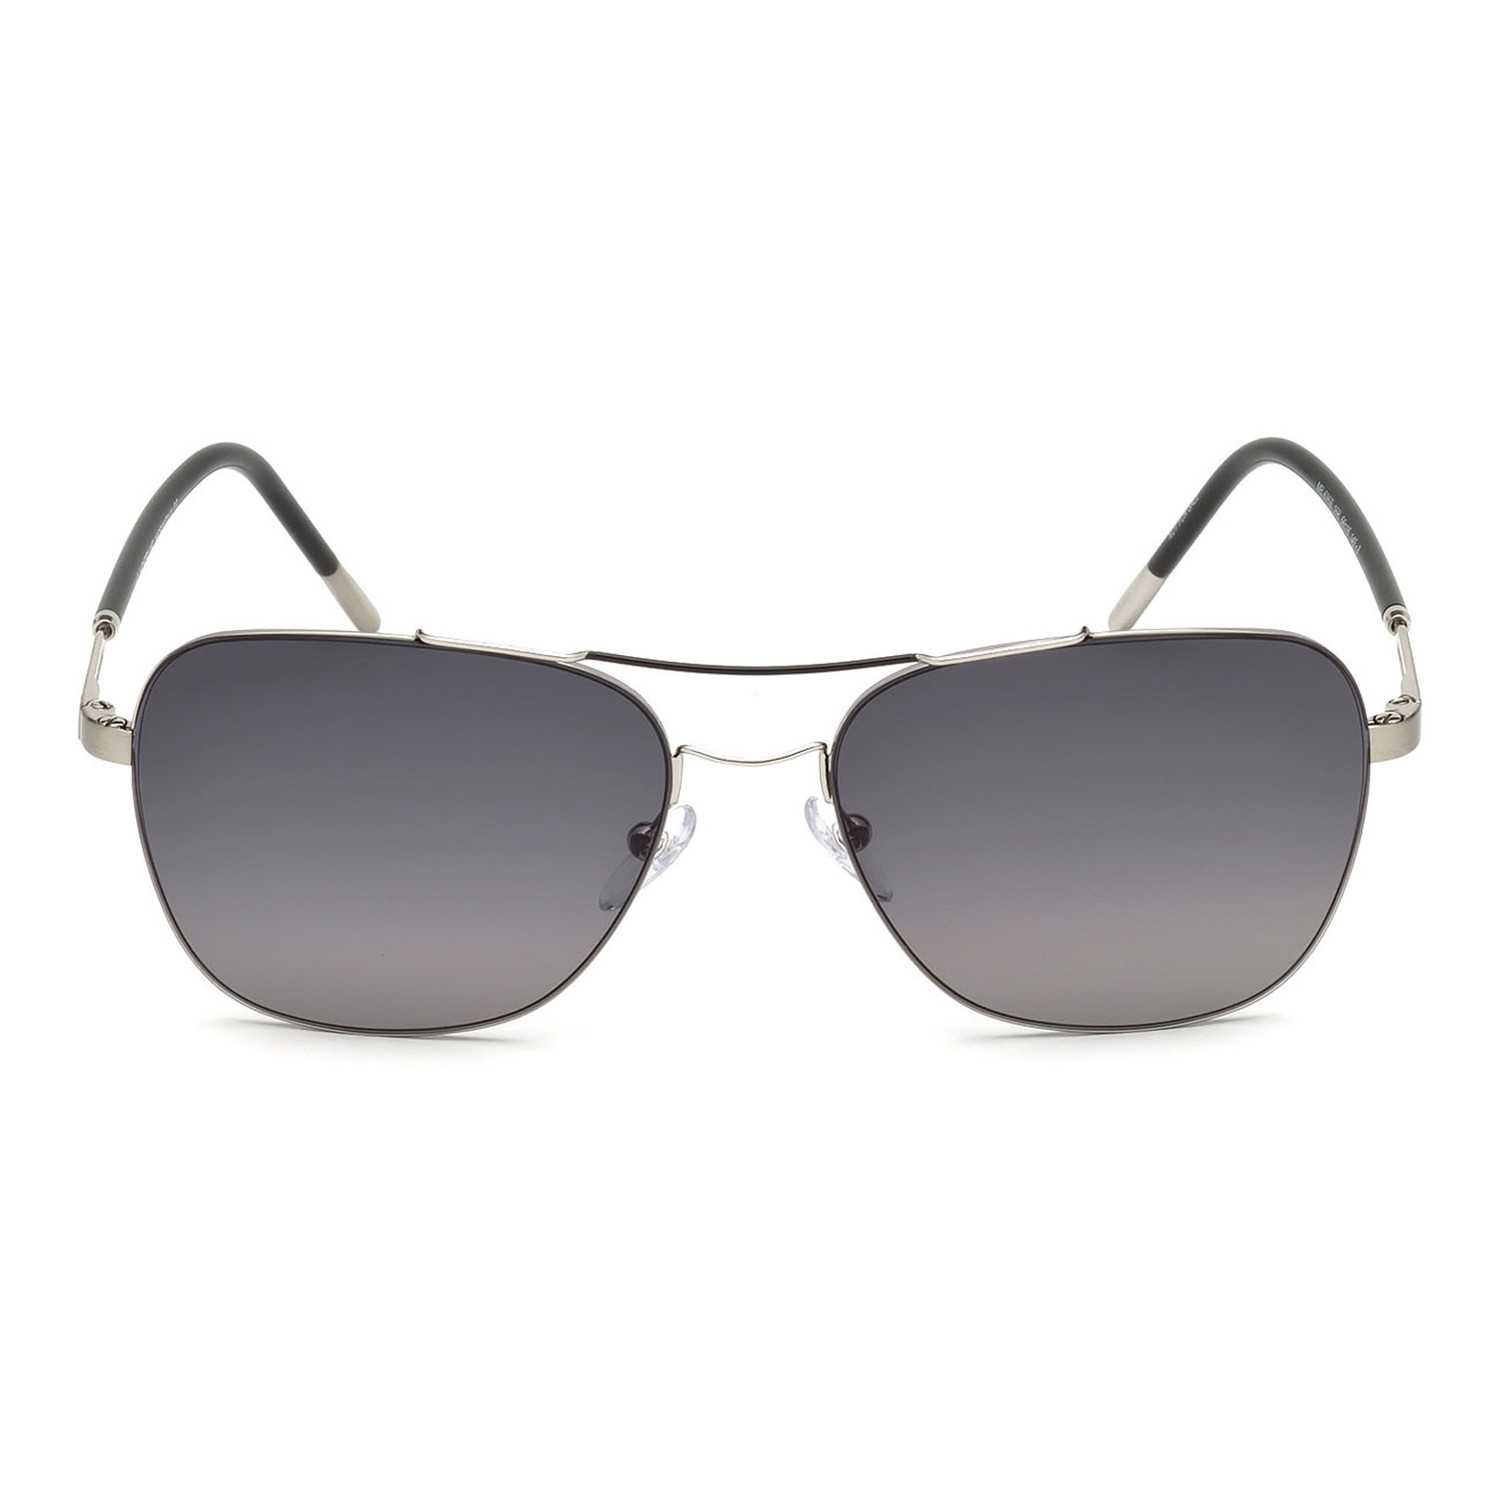 Montblanc Modified Pilot Sunglasses V2 Silver Gray